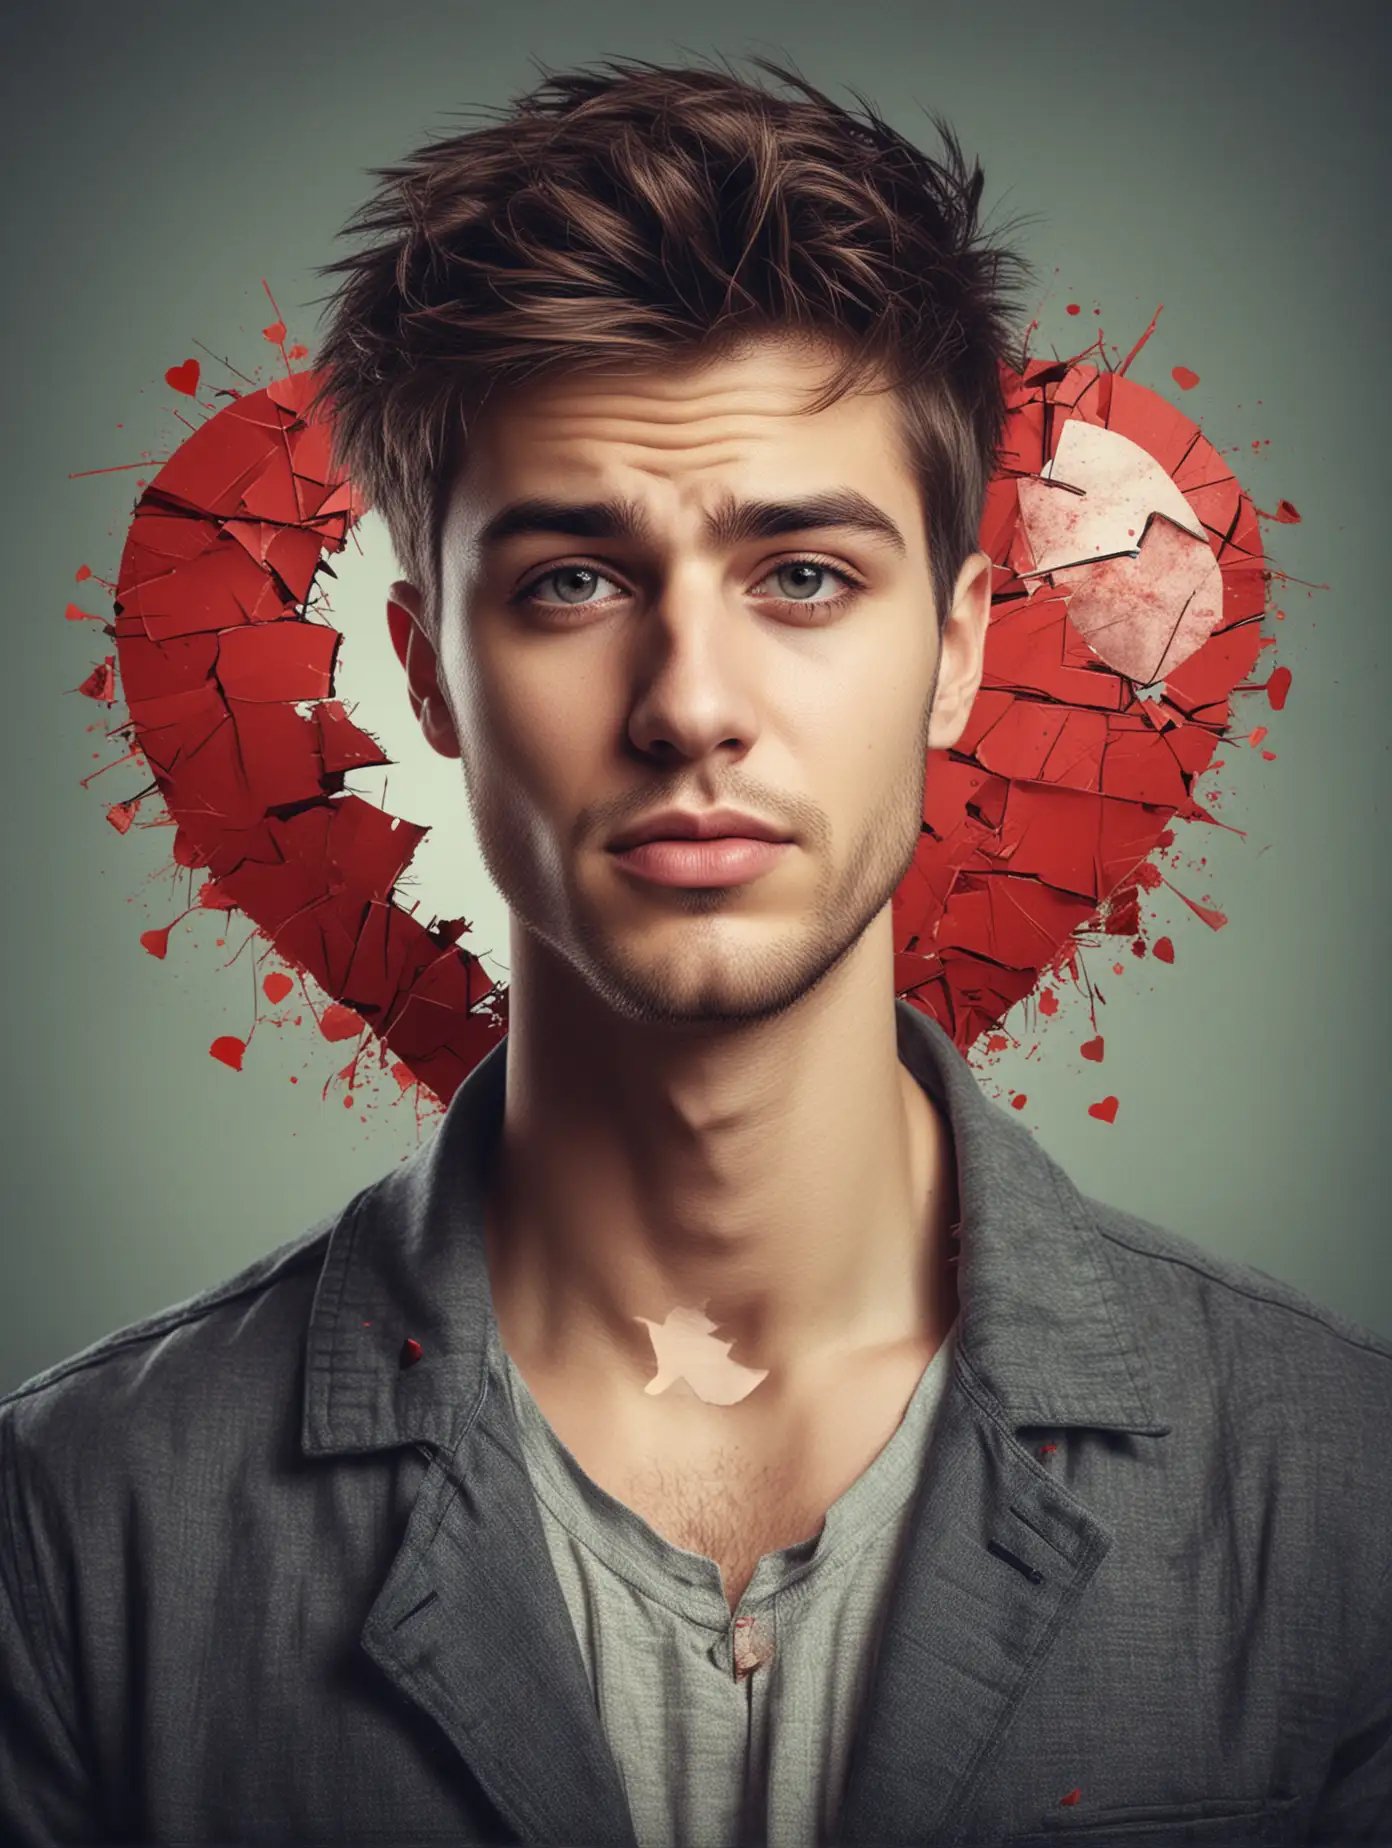 Heartbroken Man Poster Design